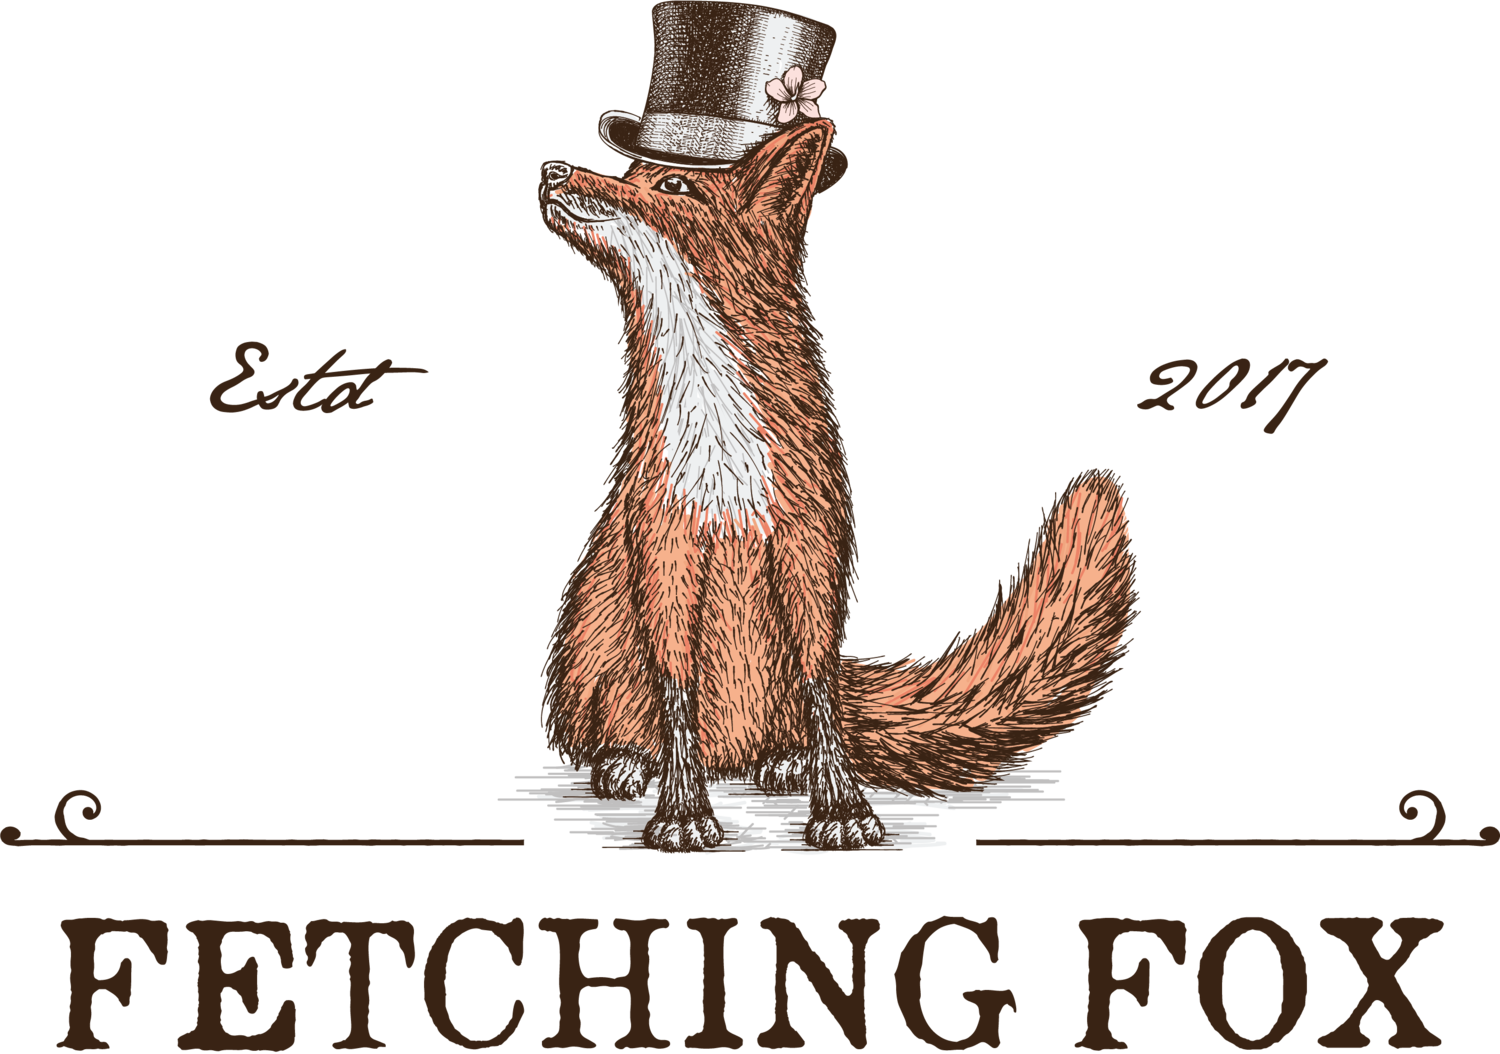 Fetching Fox